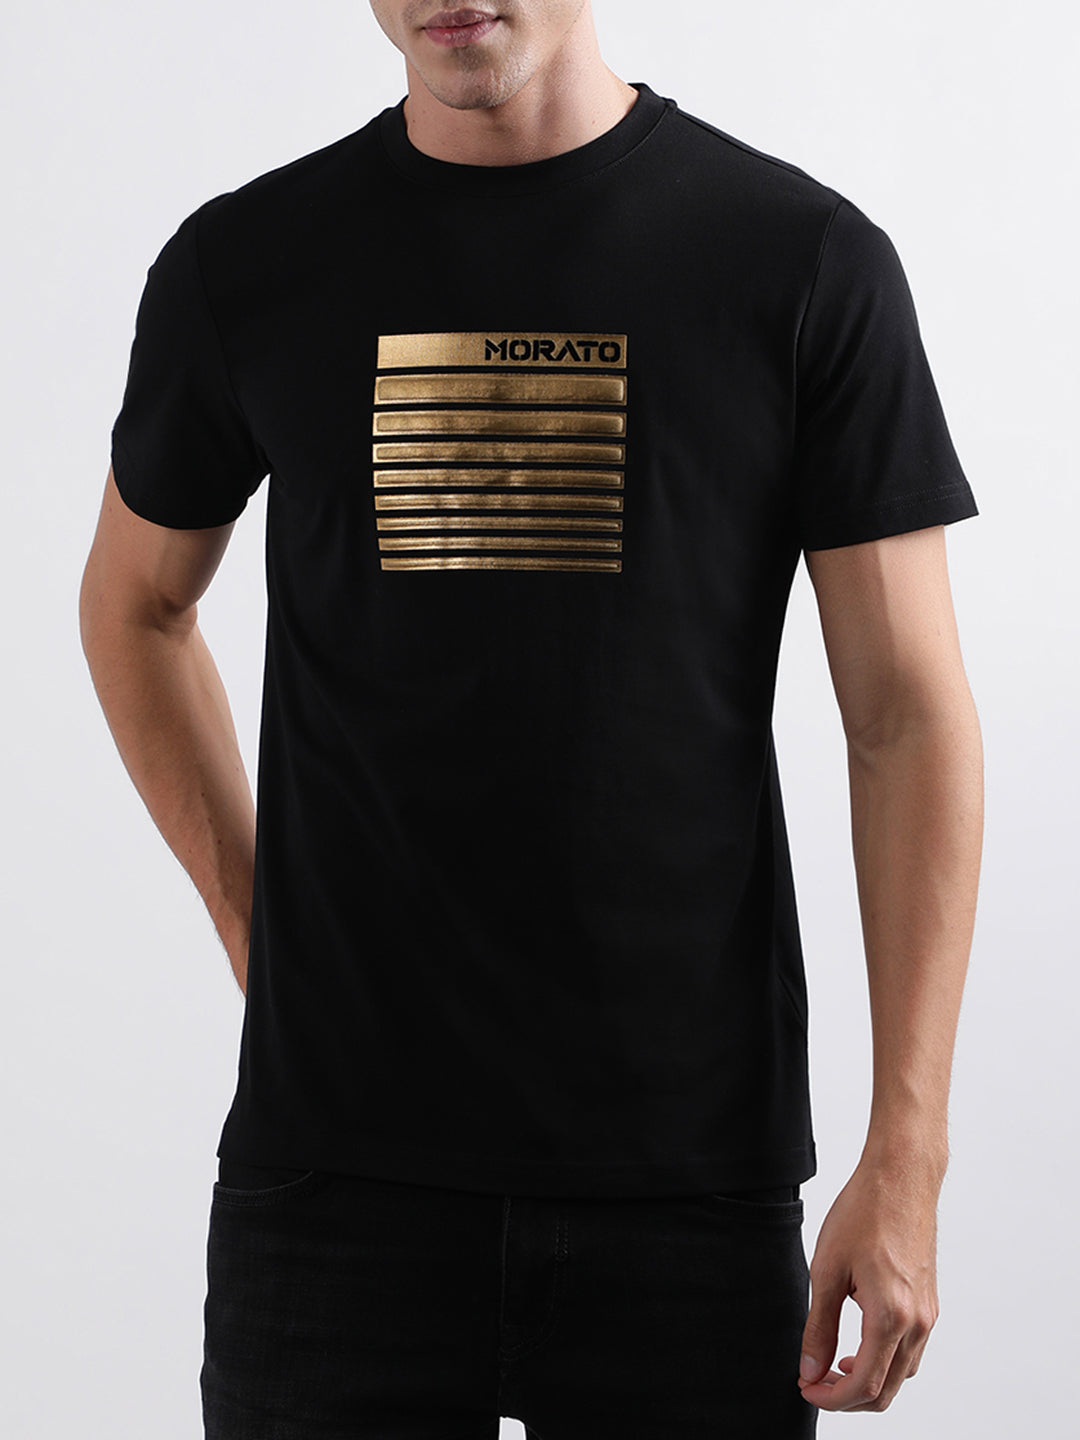 Antony Morato Men Black Printed Round Neck T-shirt